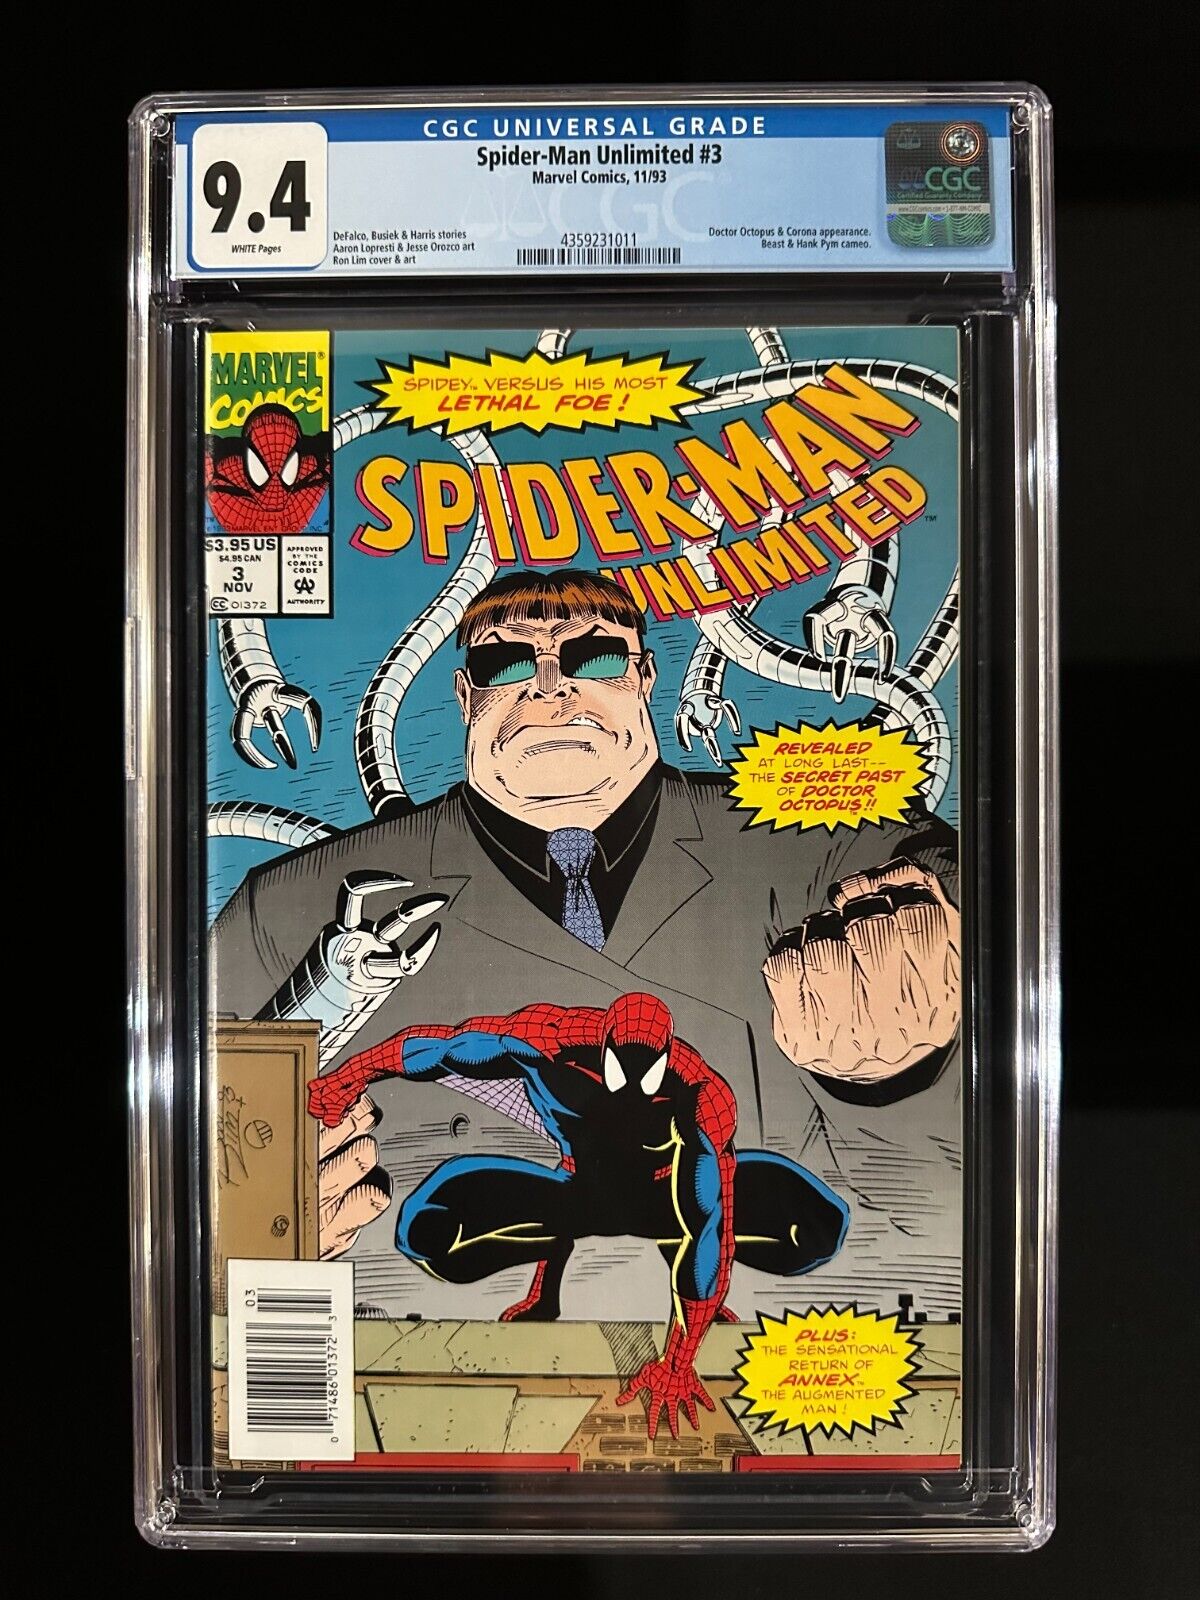 Spider-Man Unlimited #3 CGC 9.4 (1993) - Newsstand Edition - Doctor Octopus